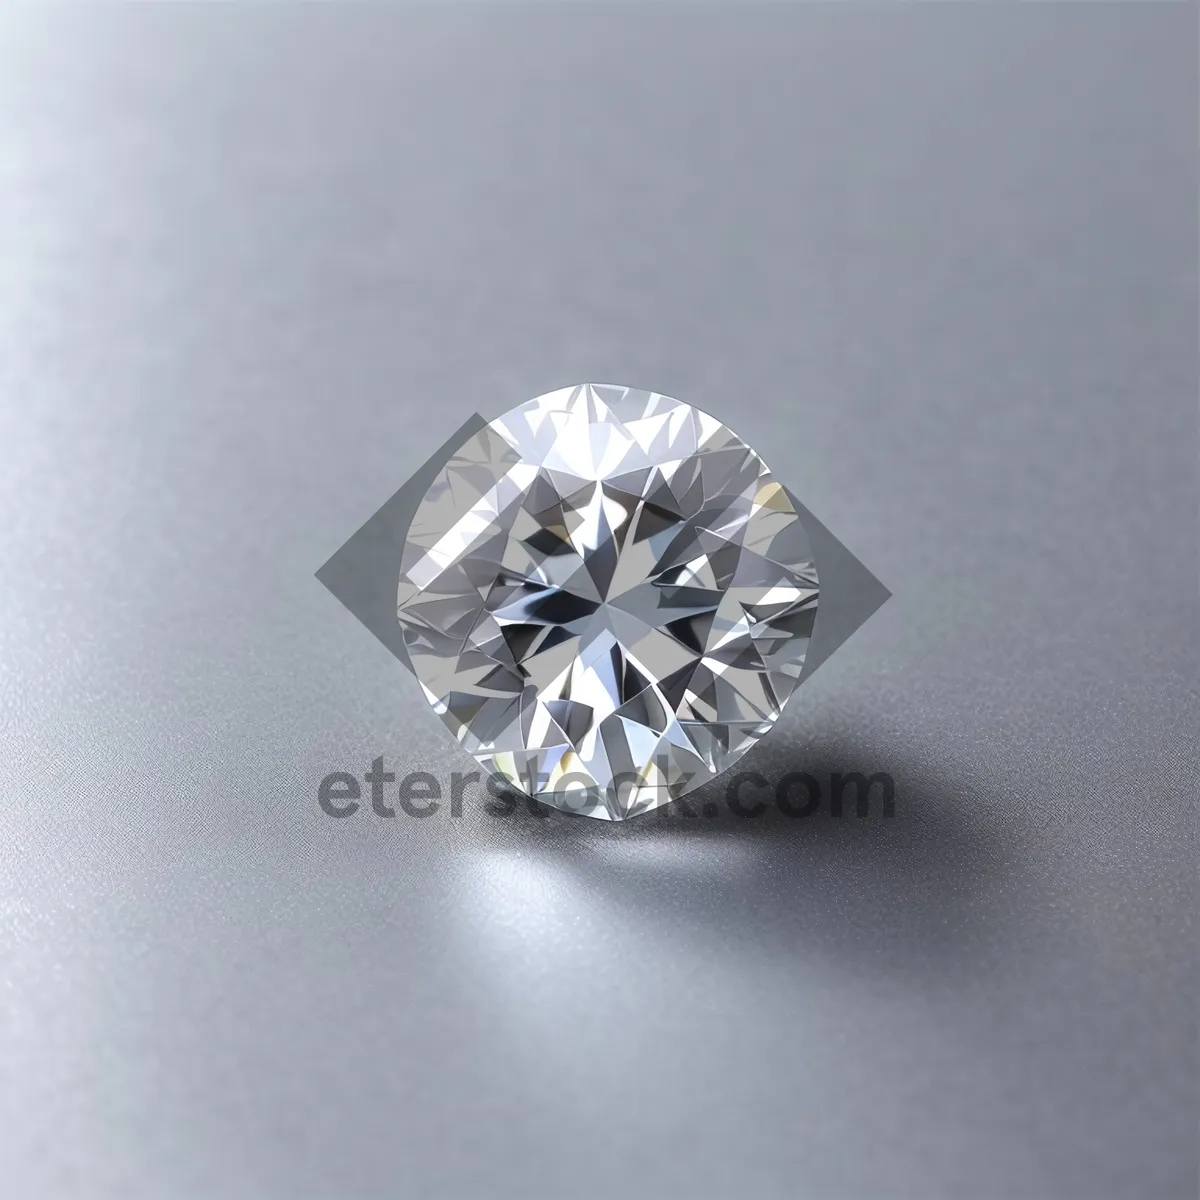 Picture of Brilliant Diamond Gemstone Jewelry - Luxury Reflection of Wealth